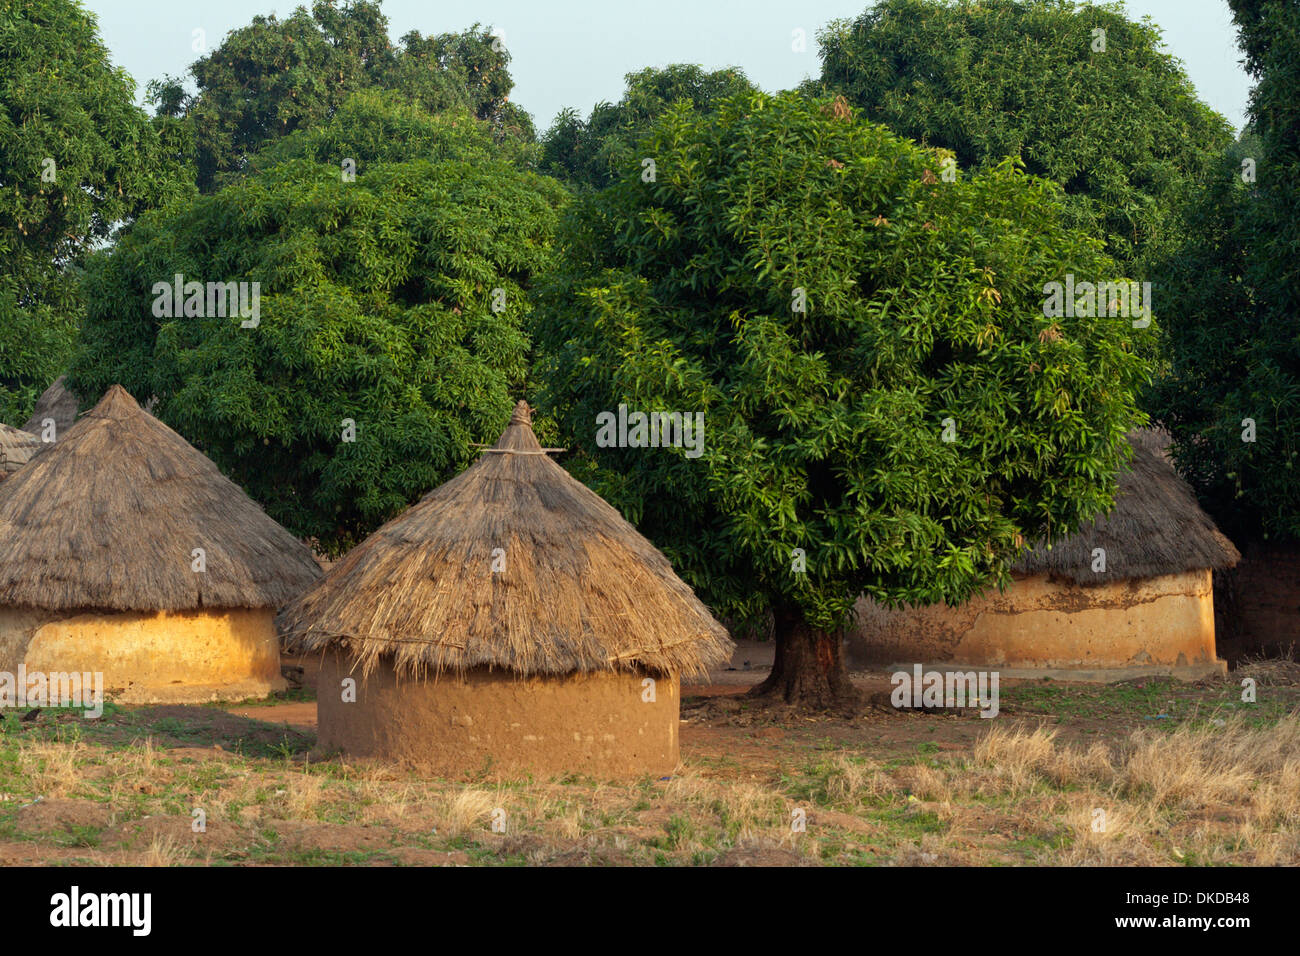 Dorf Guinea Afrika Schlamm Hütte Dach Mango Grasbäume Stockfoto